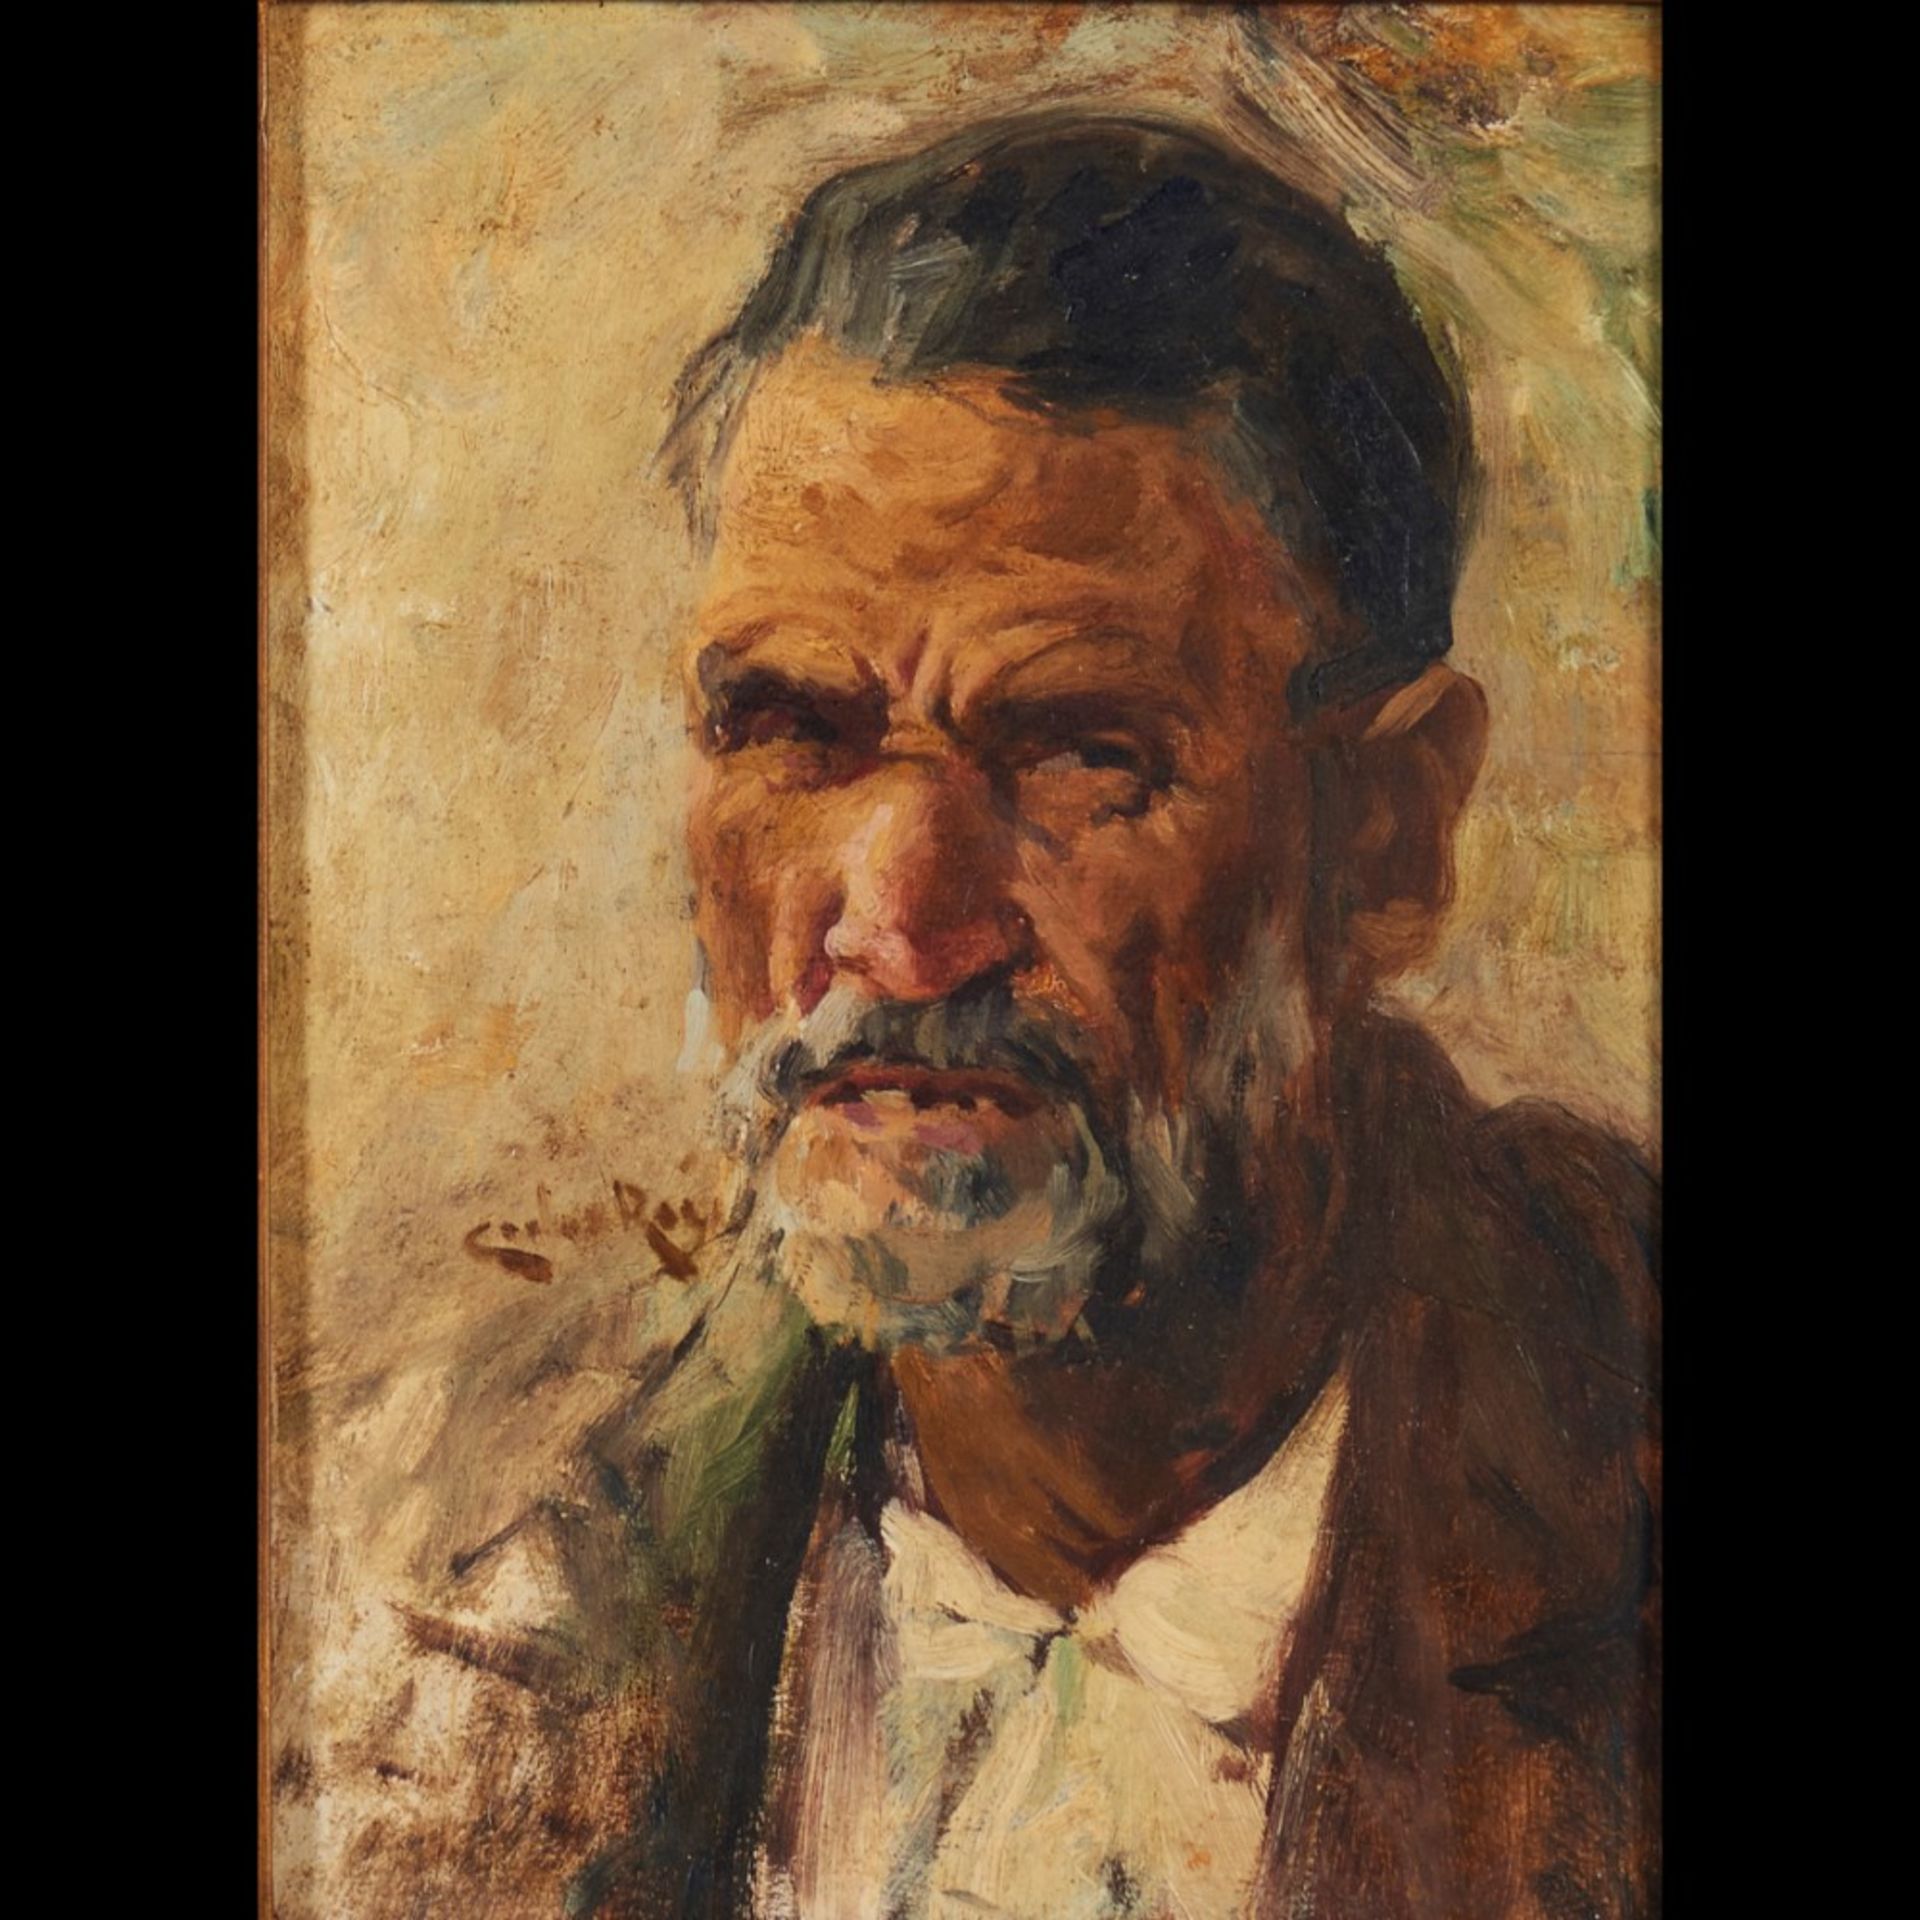 Carlos Reis (1864-1940) A portrait of a man